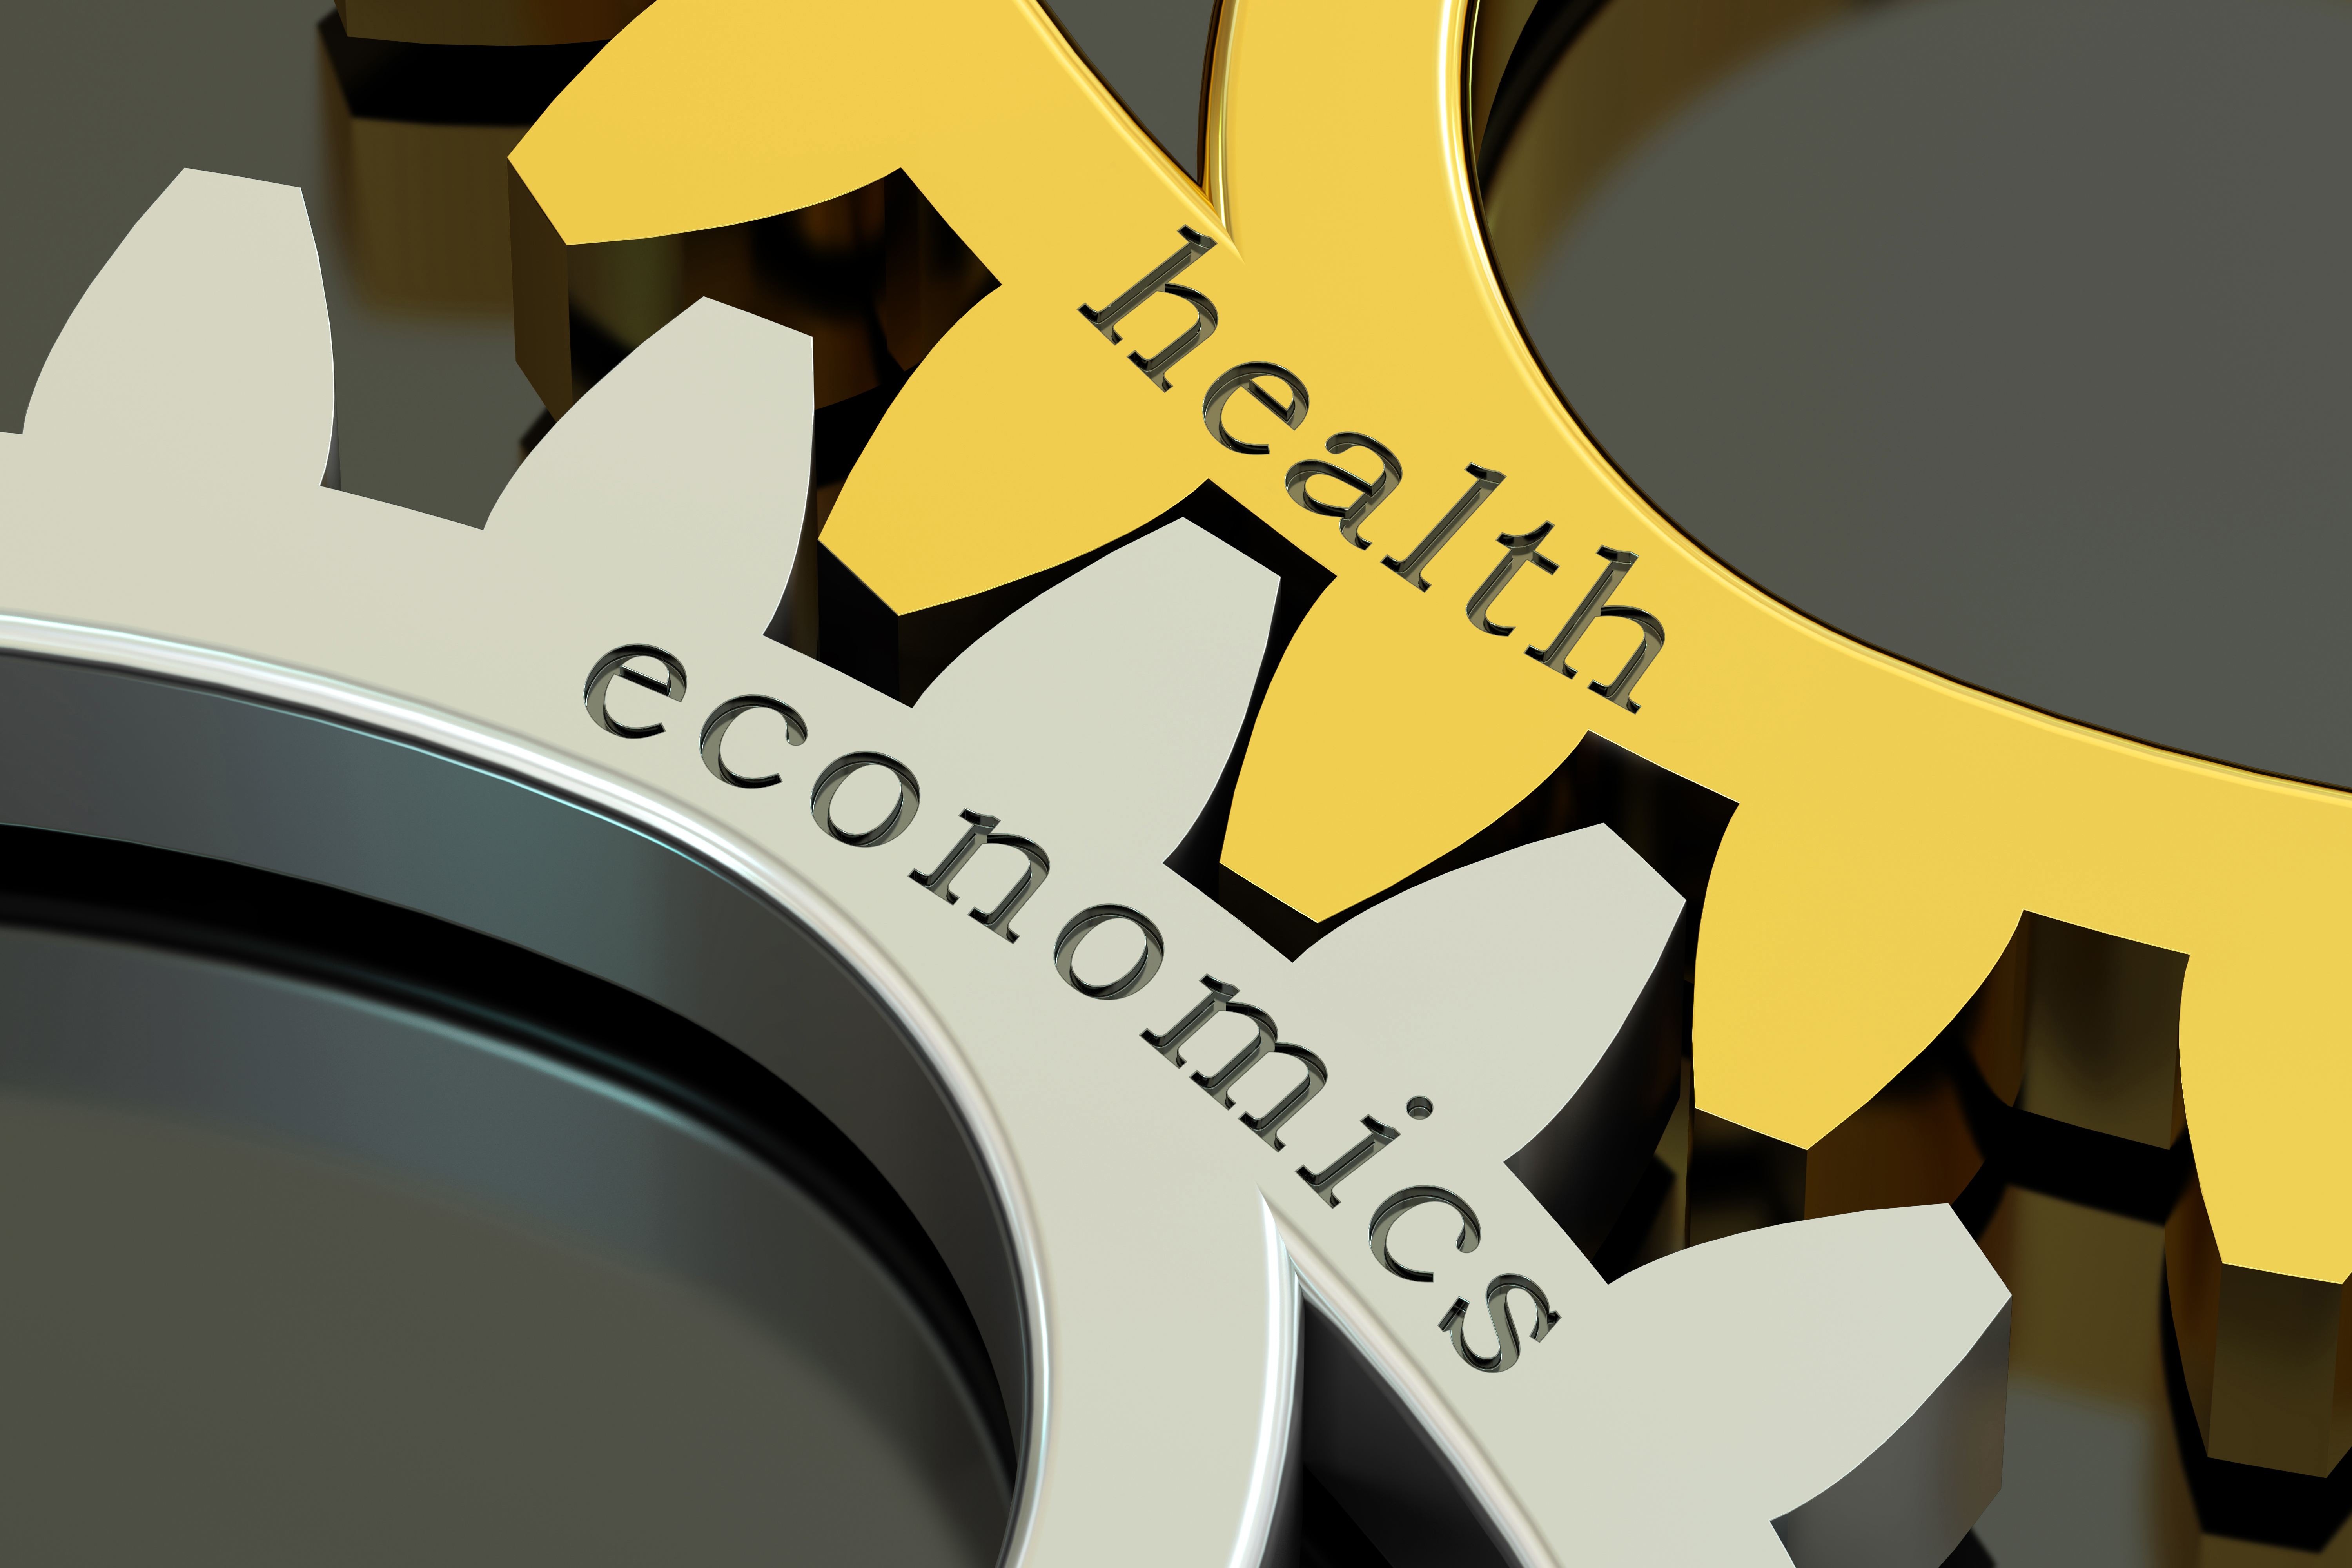 health economics phd programs